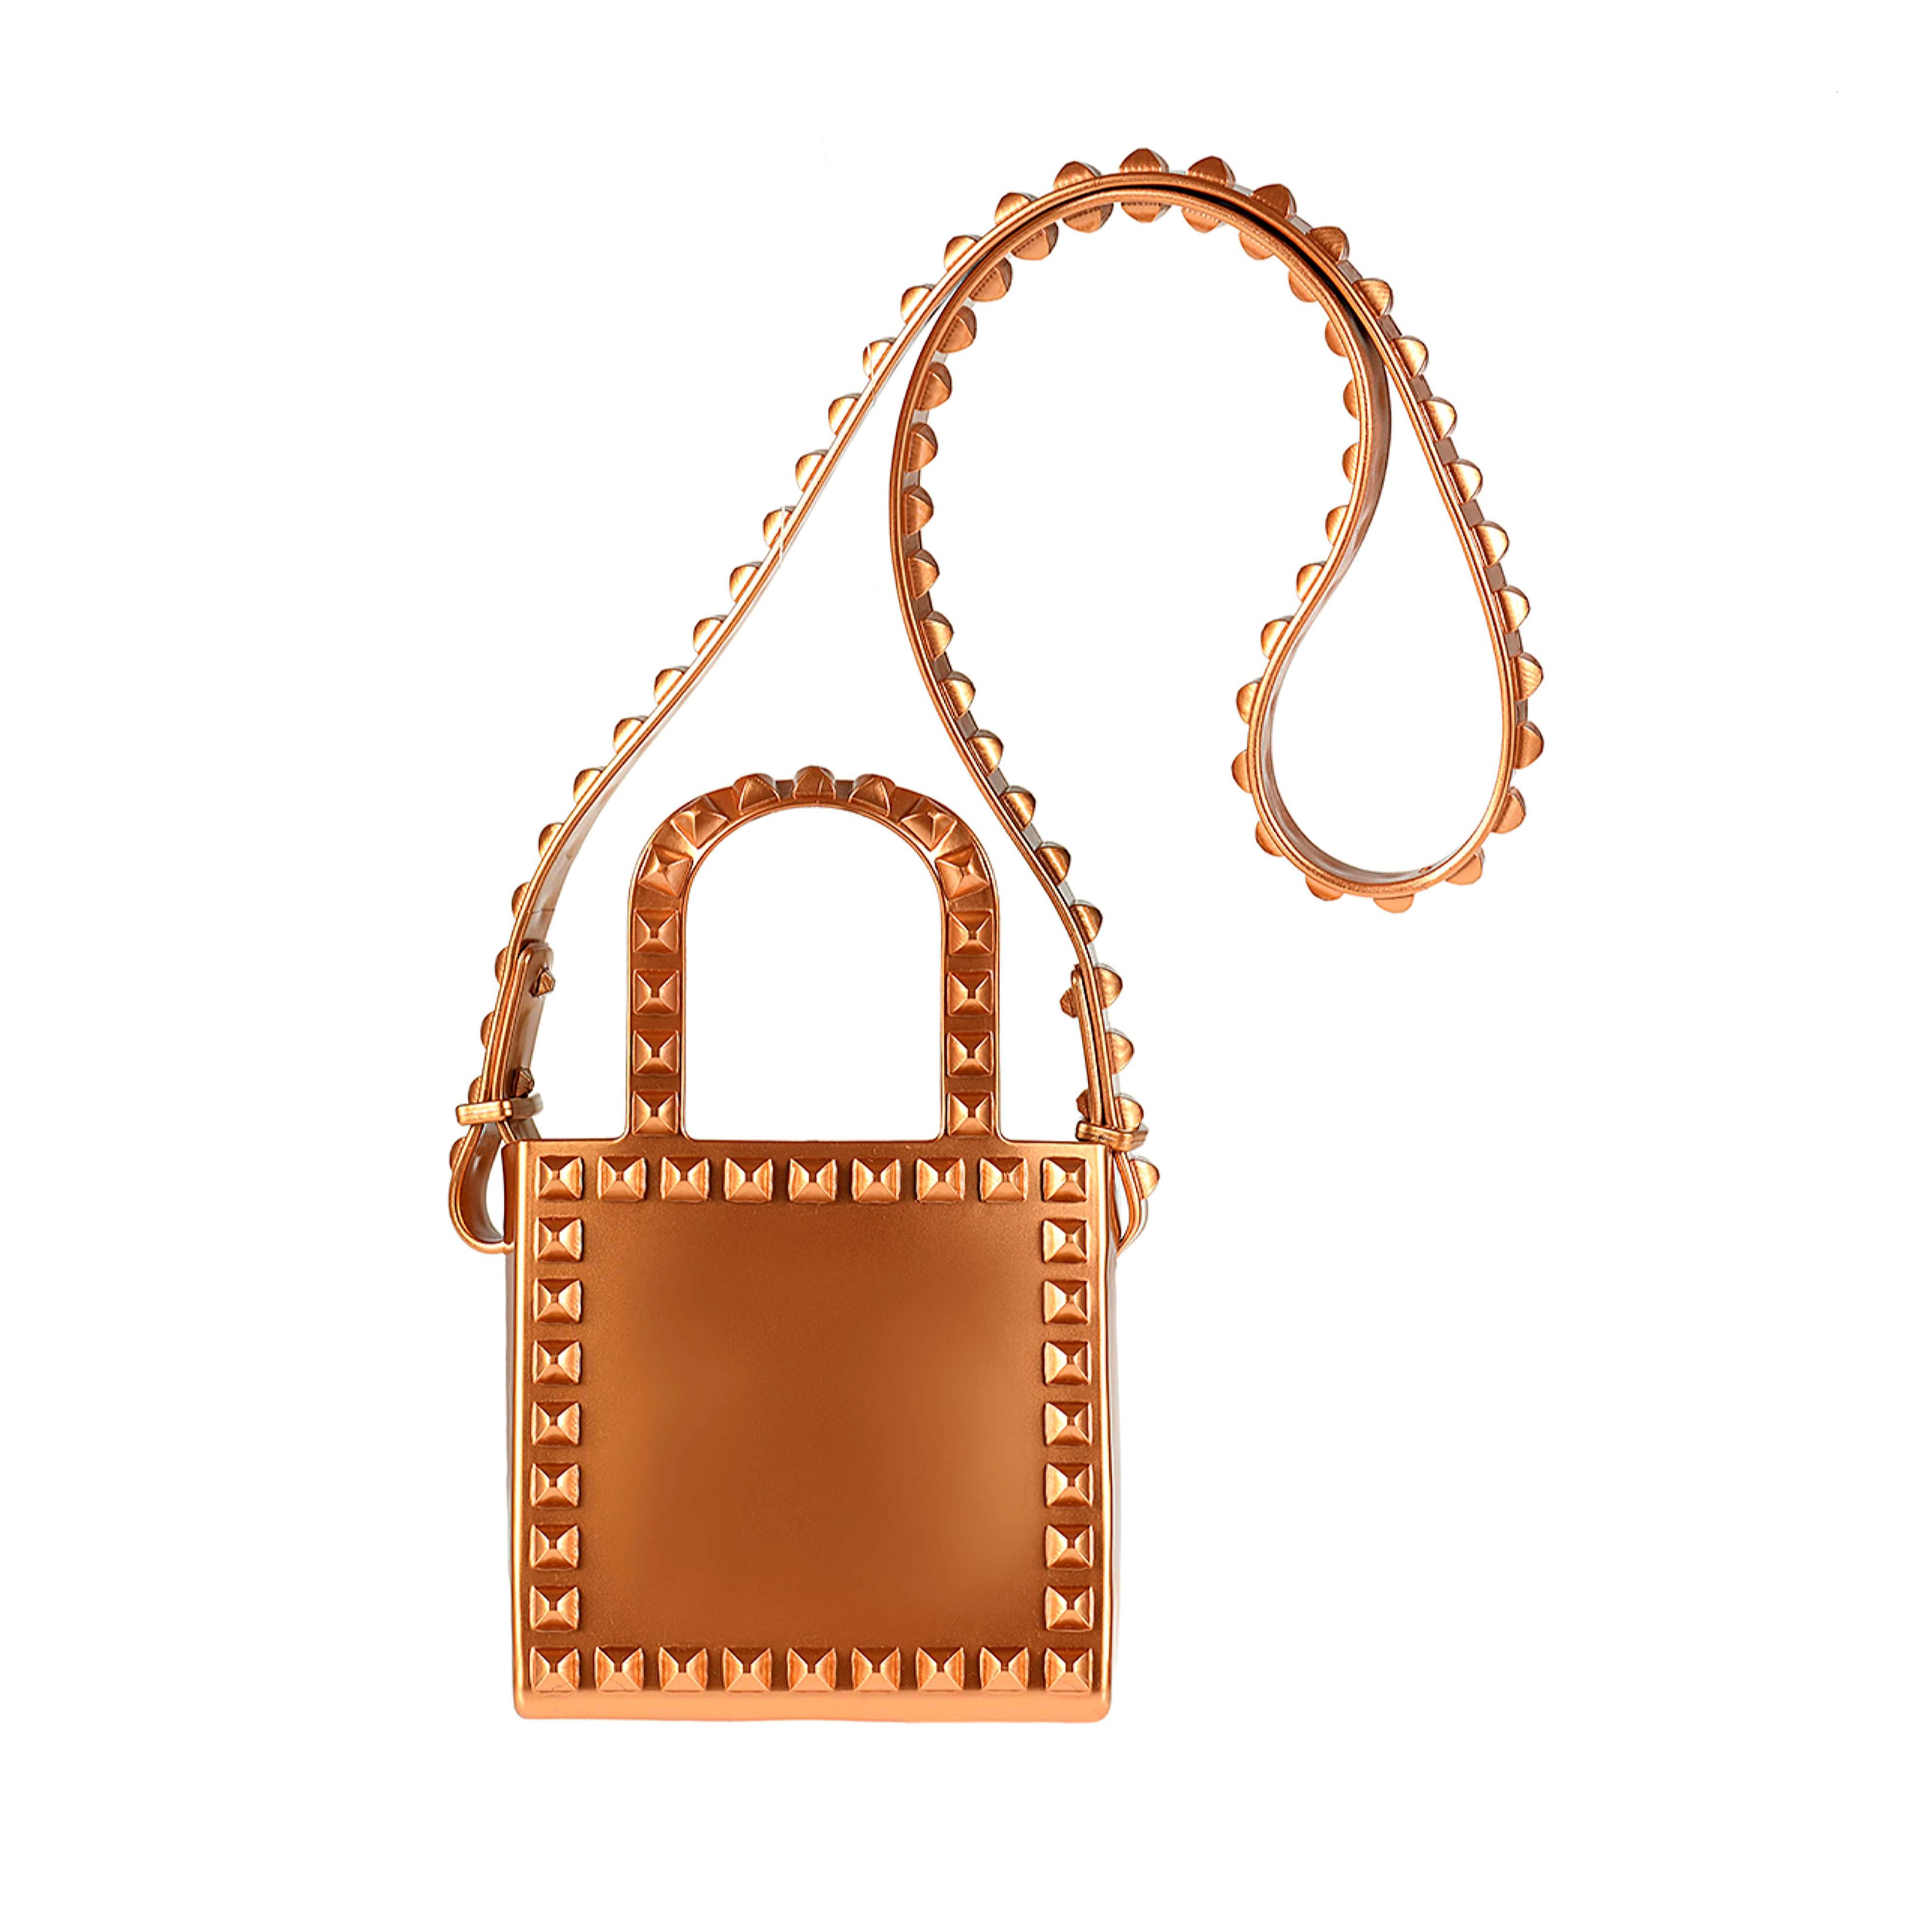 Louis Vuitton Jelly Shopping Bag